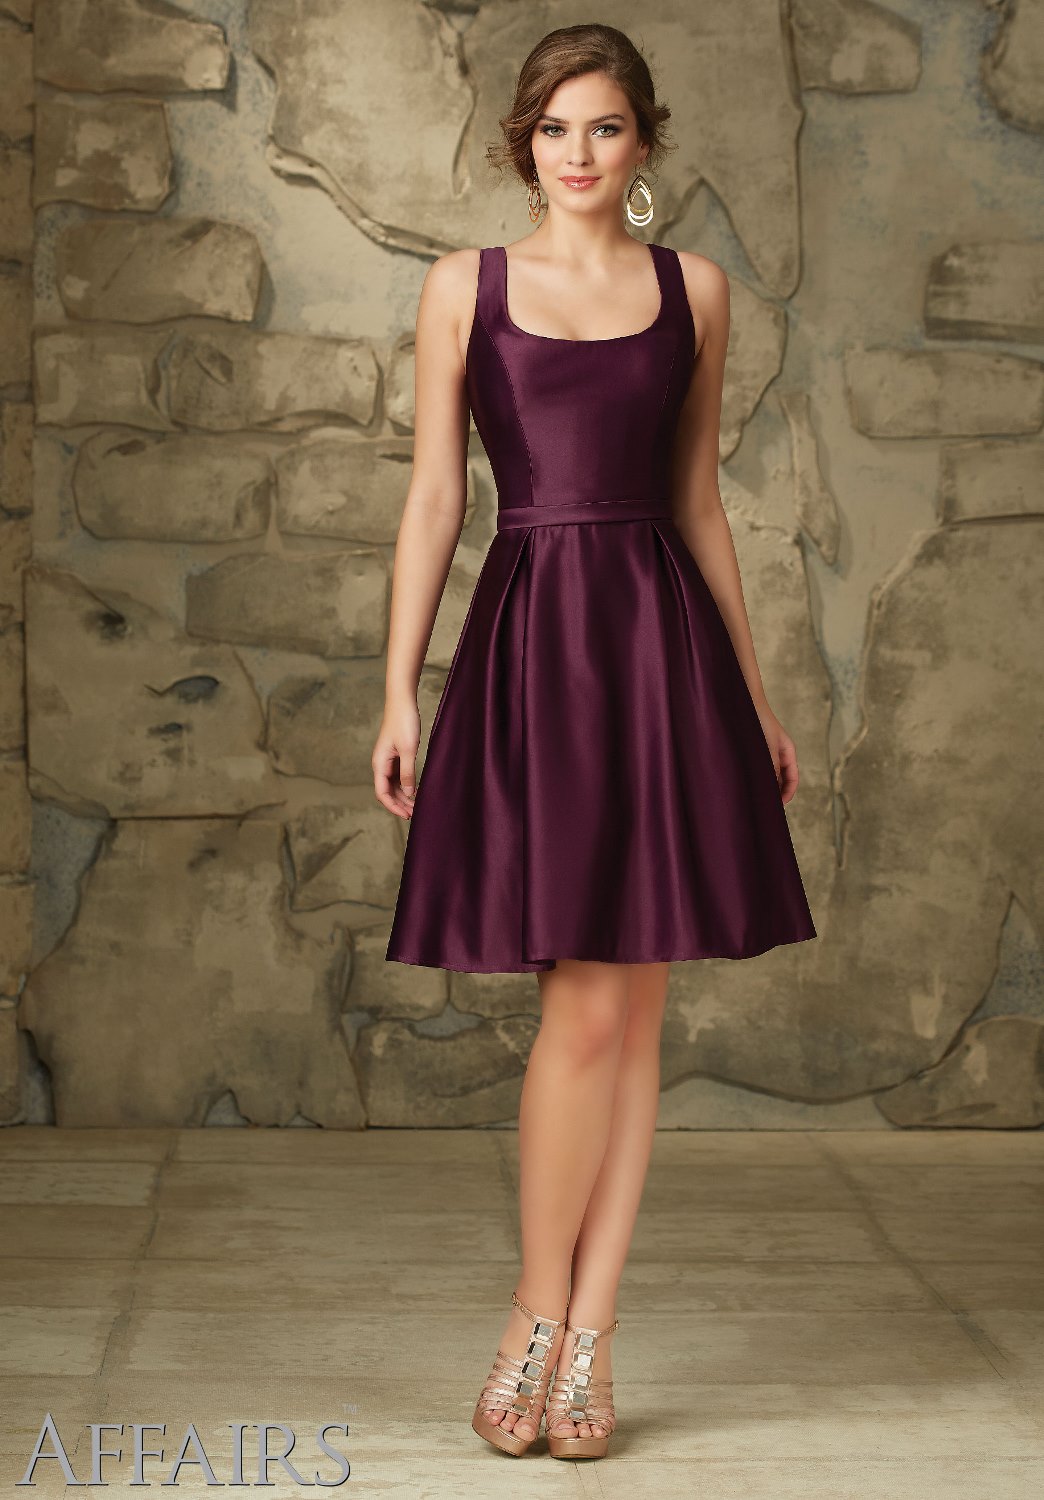 Dress - Mori Lee AFFAIRS FALL 2015 Collection: 31064 - Satin | MoriLee ...